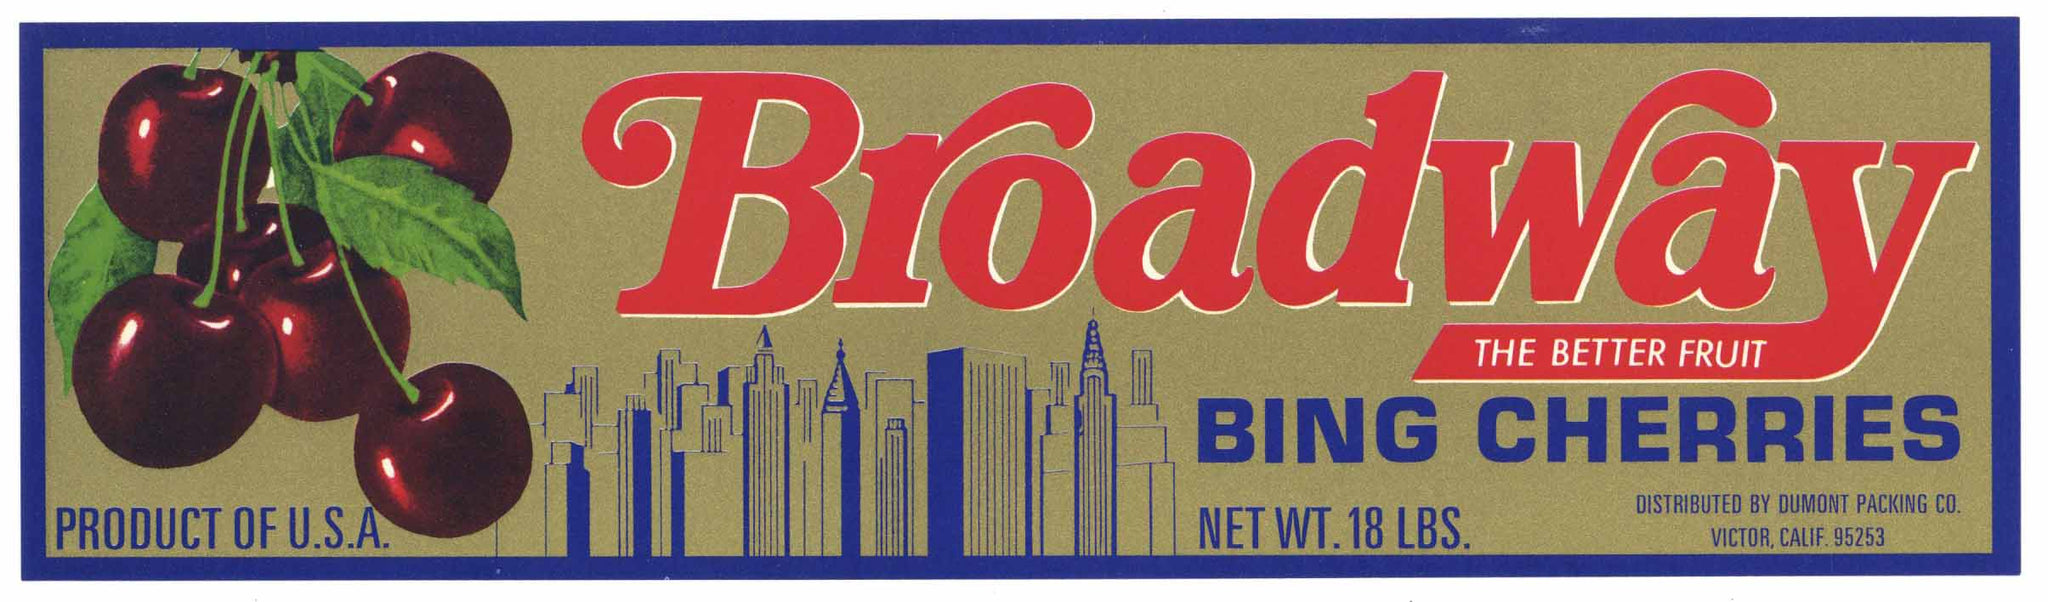 Broadway Brand Vintage Cherry Crate Label